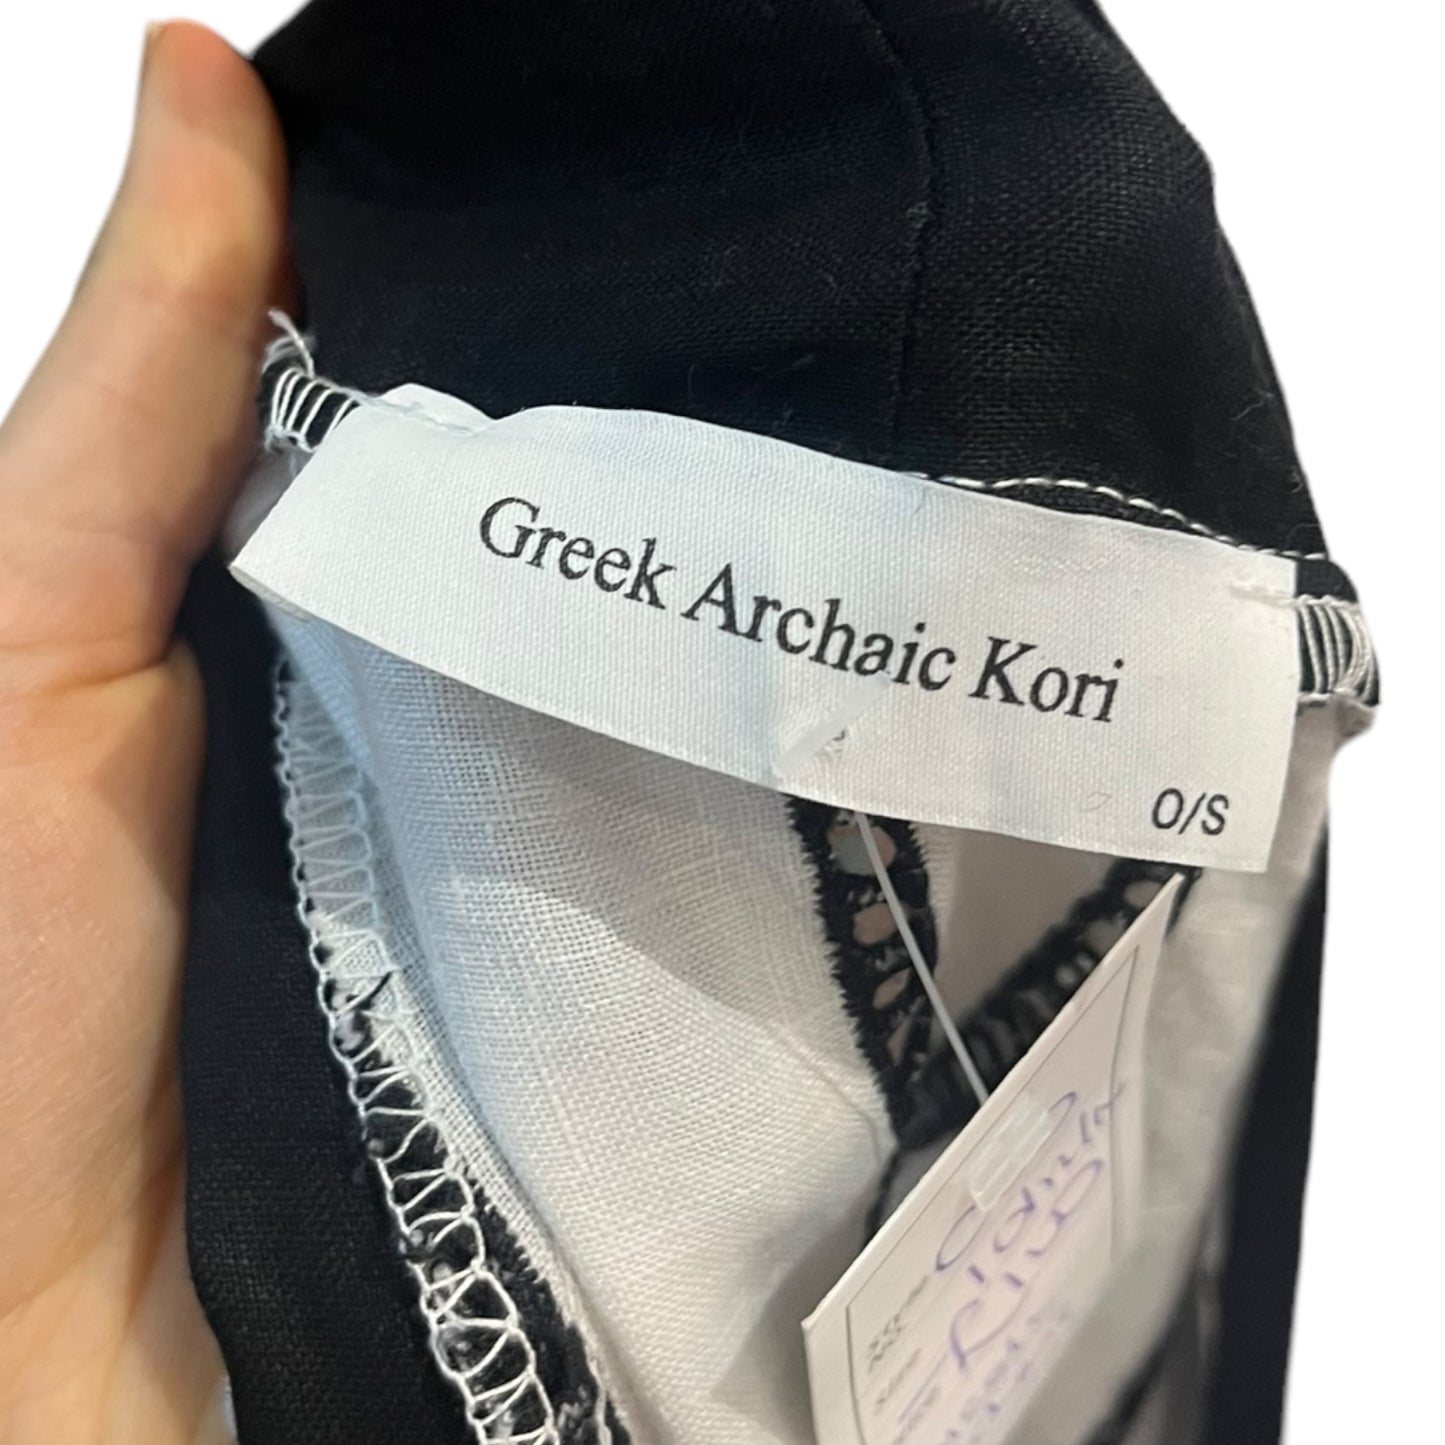 Greek Archaic Kori White and Black Long Jacket - One Size